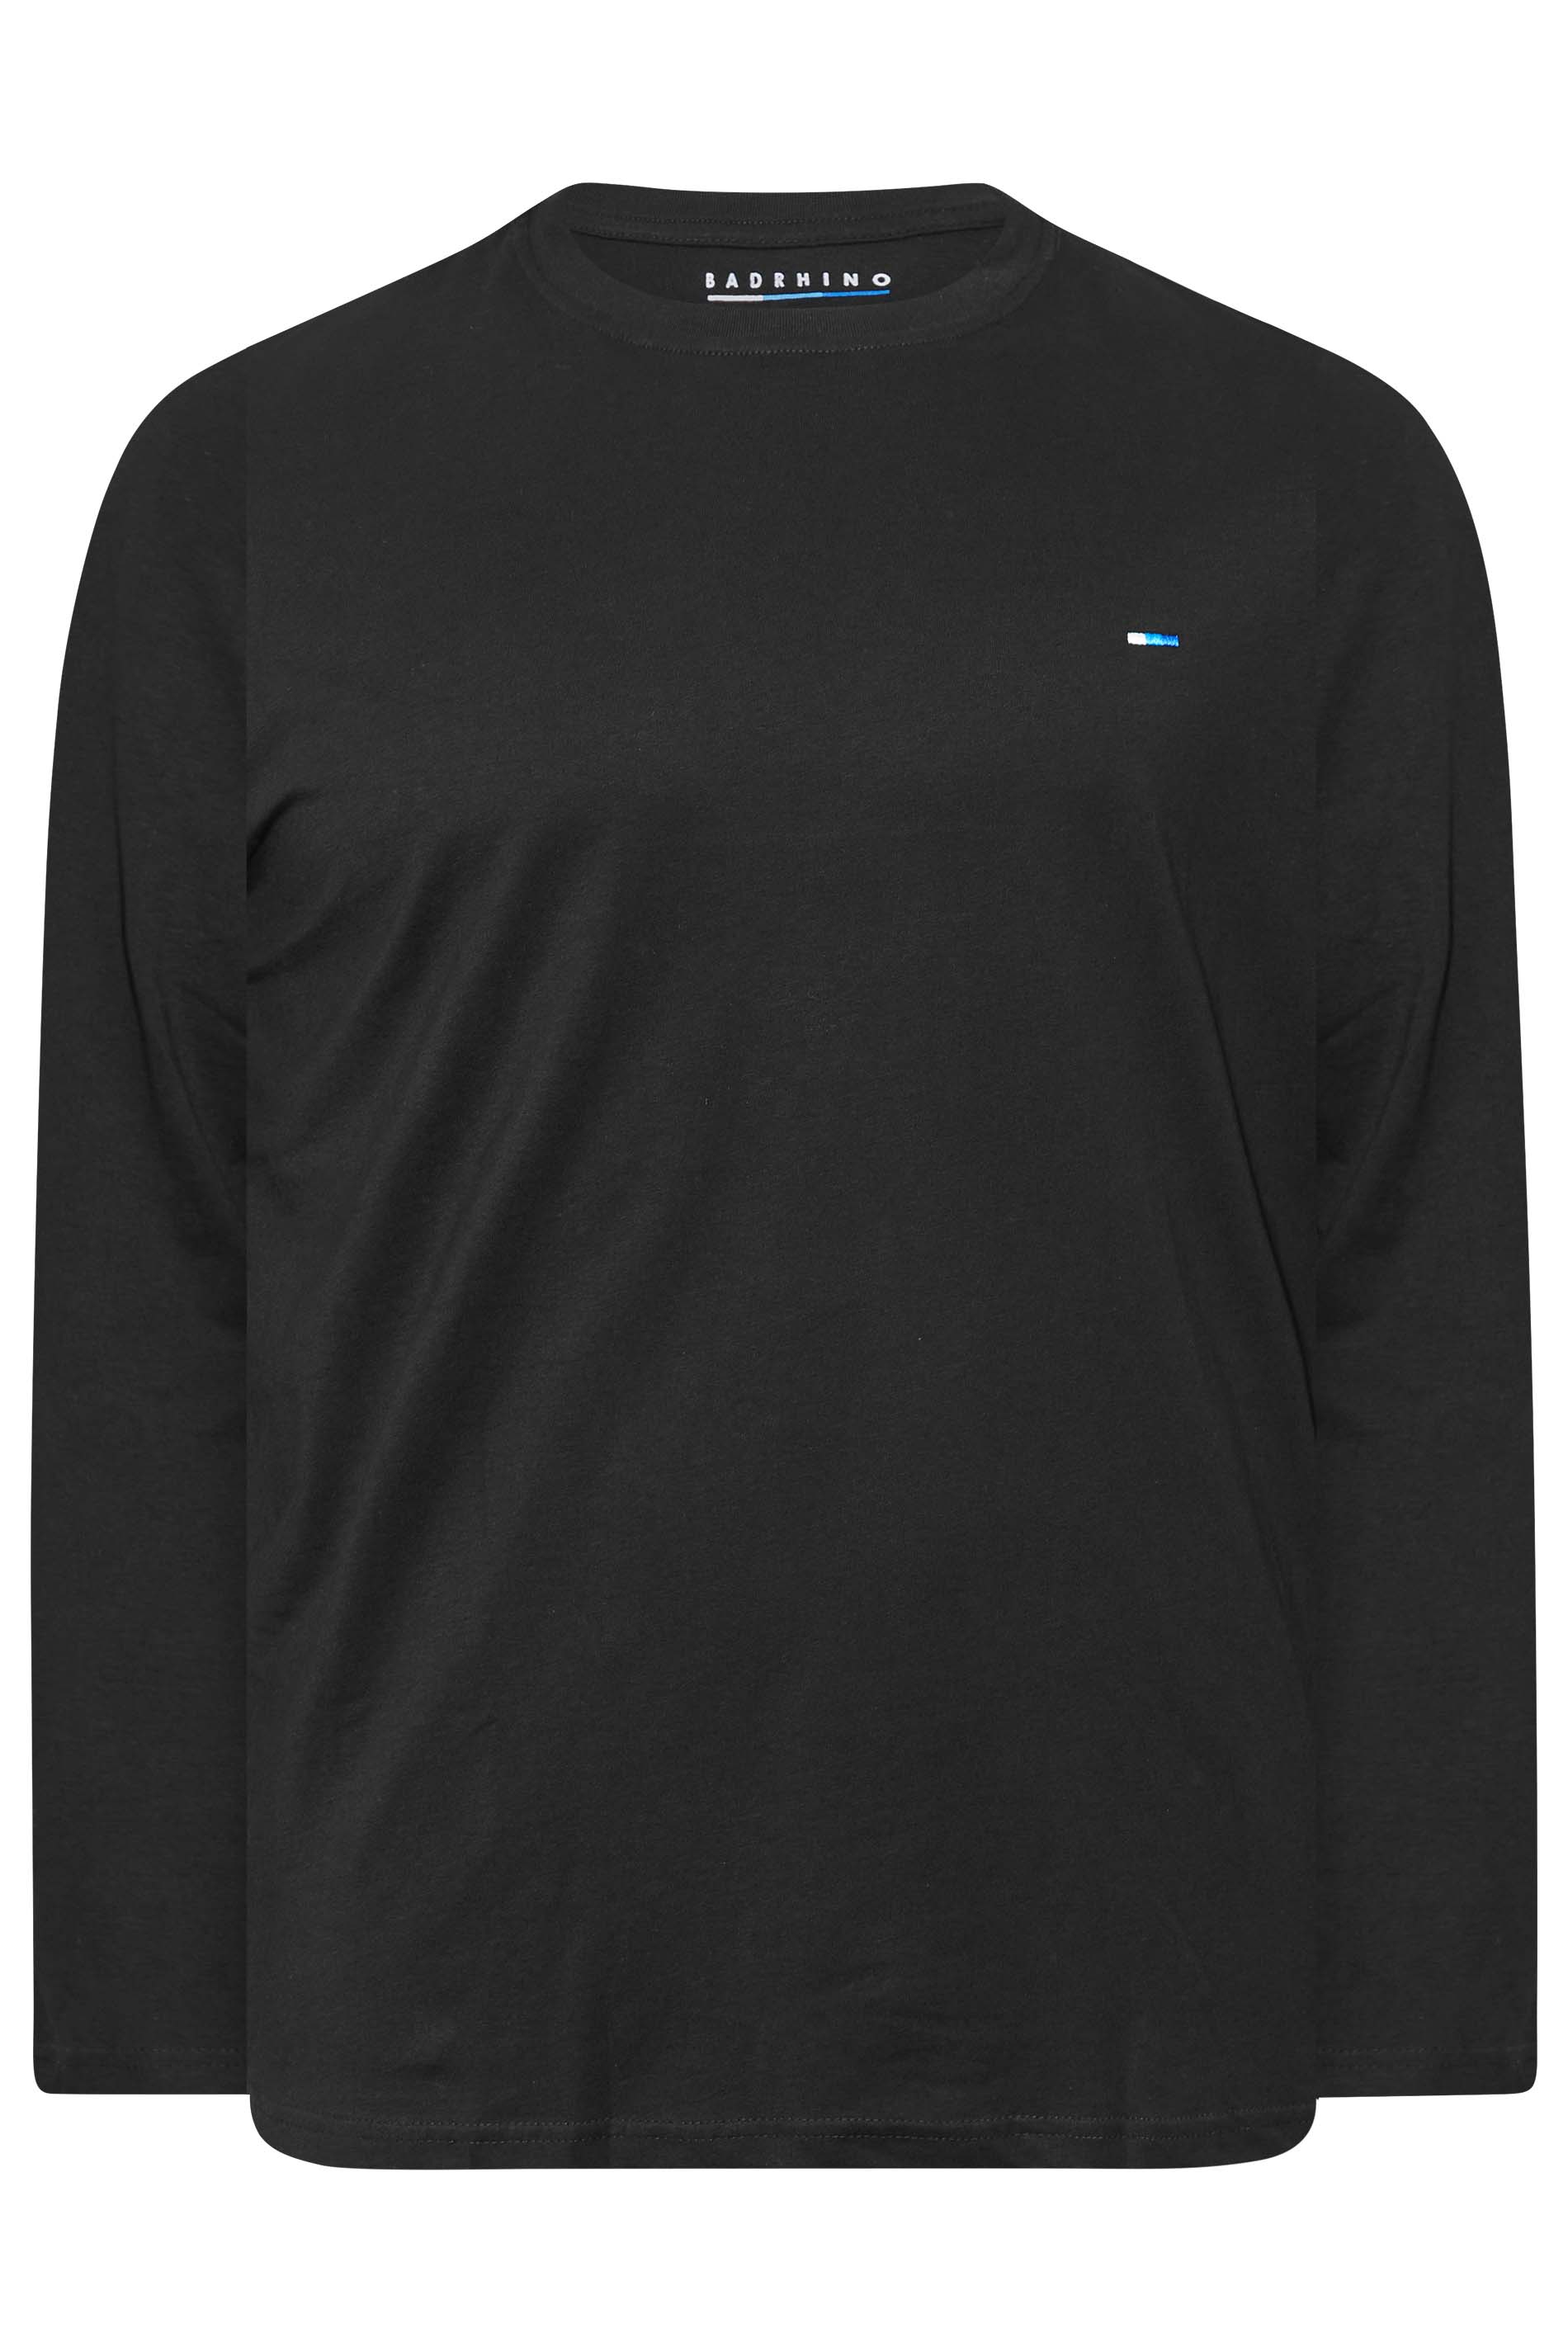 BadRhino For Less Lightweight Black Long Sleeve T-Shirt | BadRhino 3